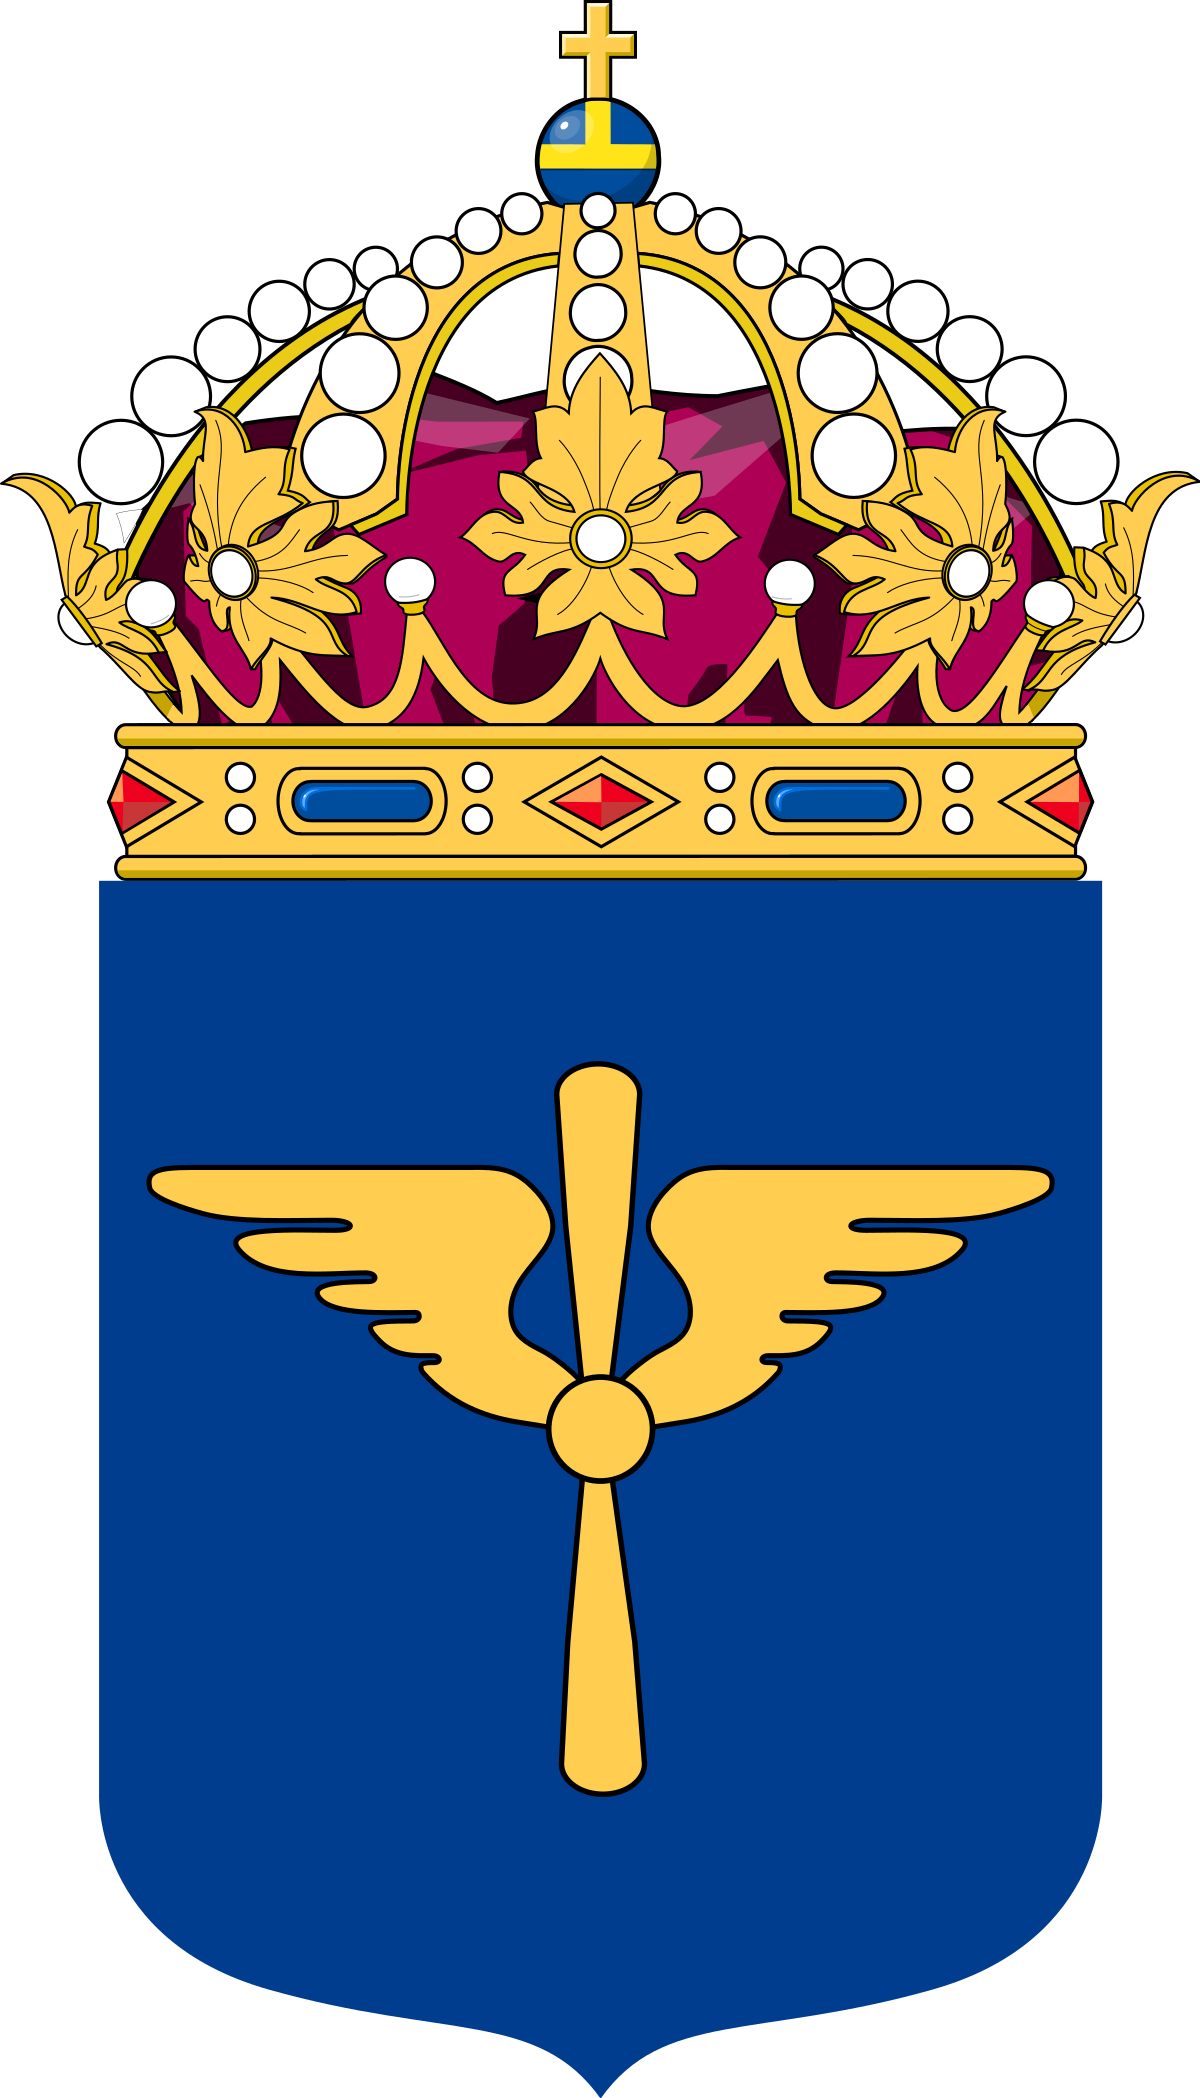 swedish air force